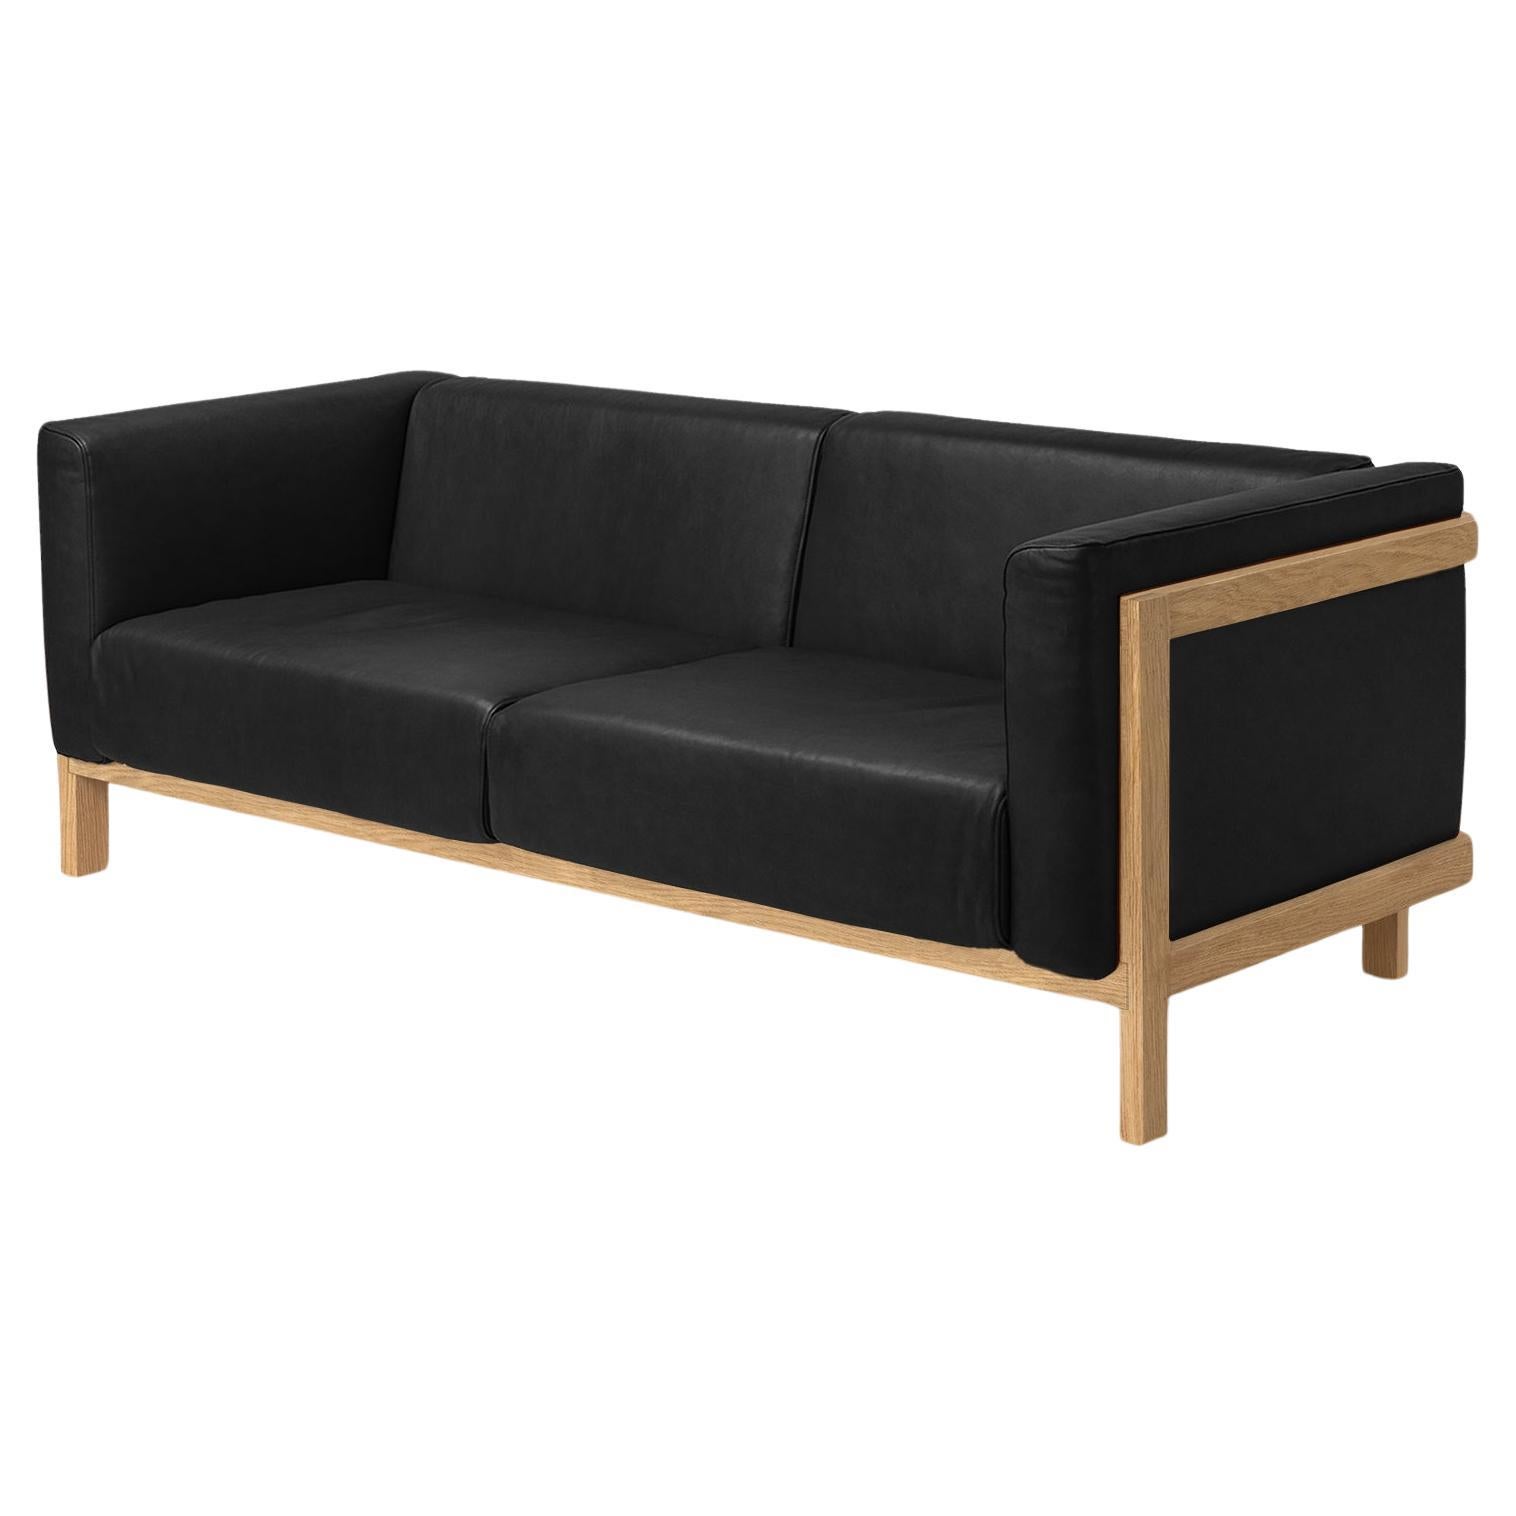 Minimalist three seater sofa oak - leather upholstered For Sale